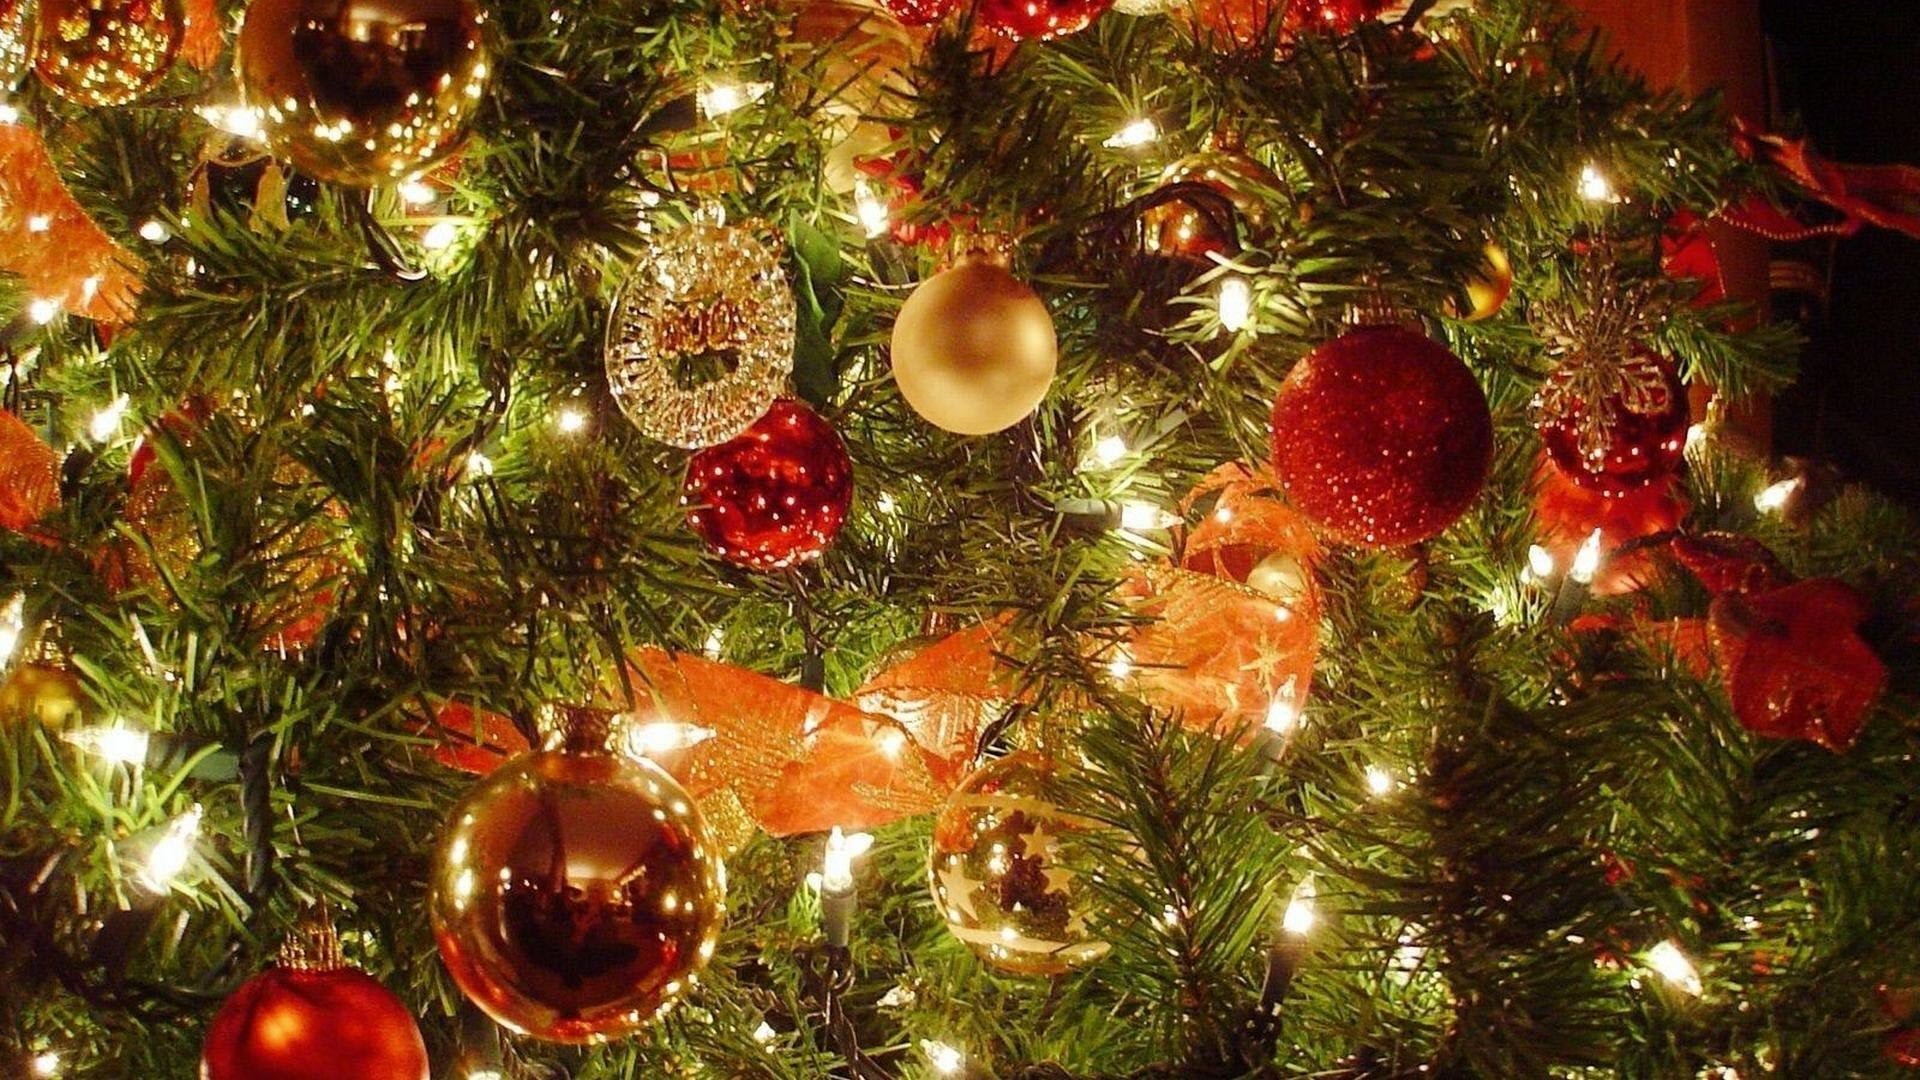 Christmas Tree Photos | Download Free Desktop Wallpaper Images ...